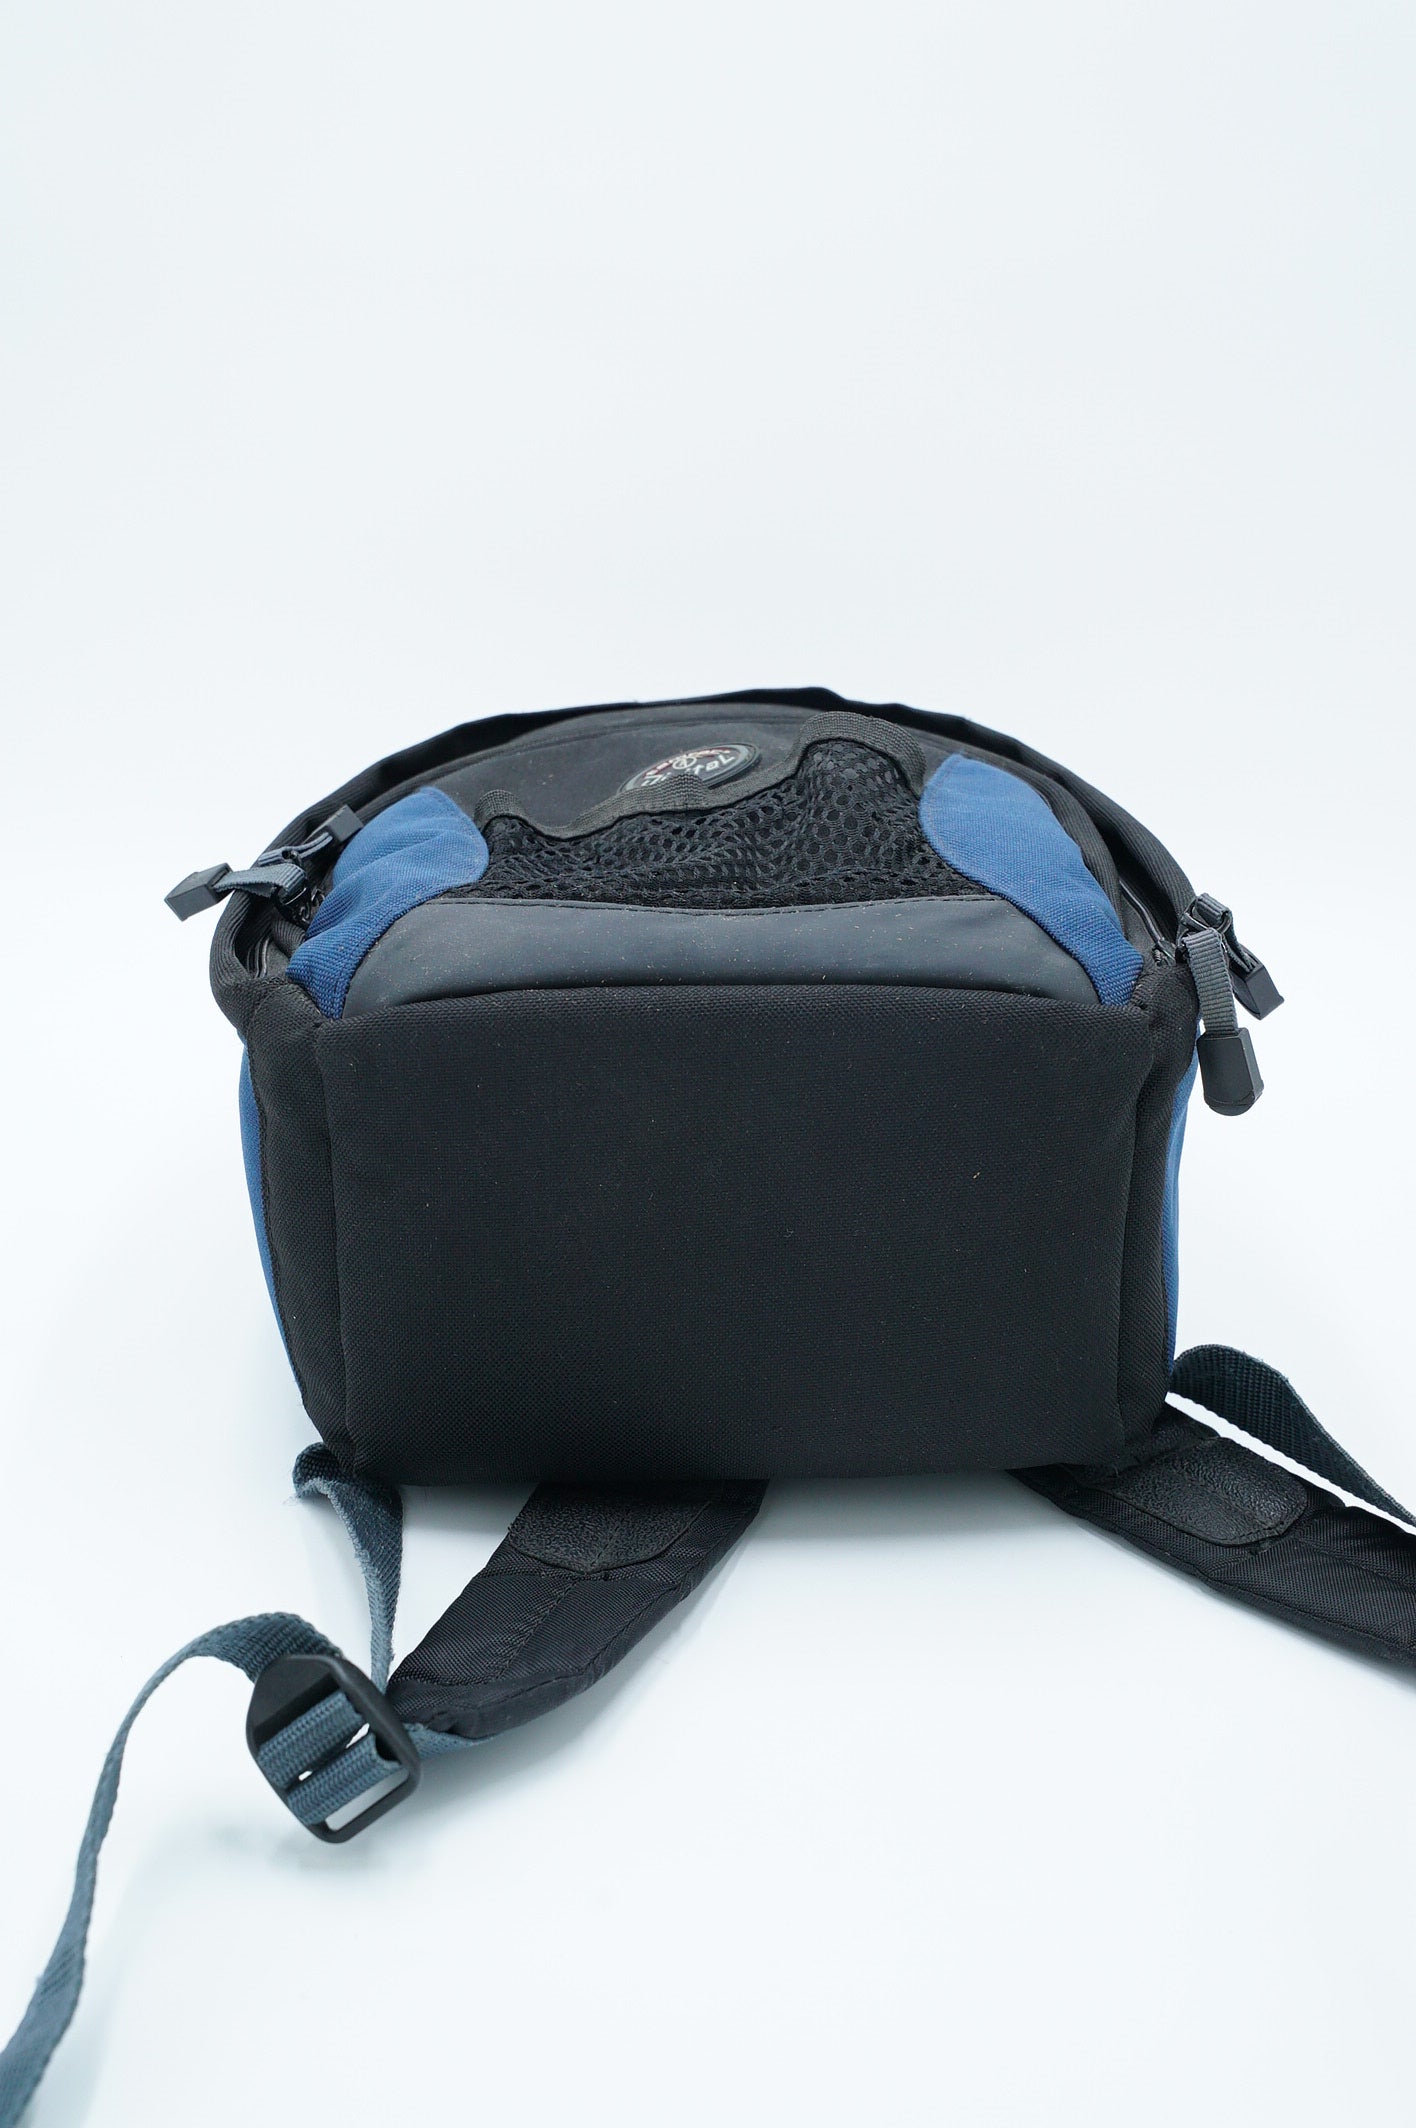 Tamrac Digital Backpack, Black/Blue, Used